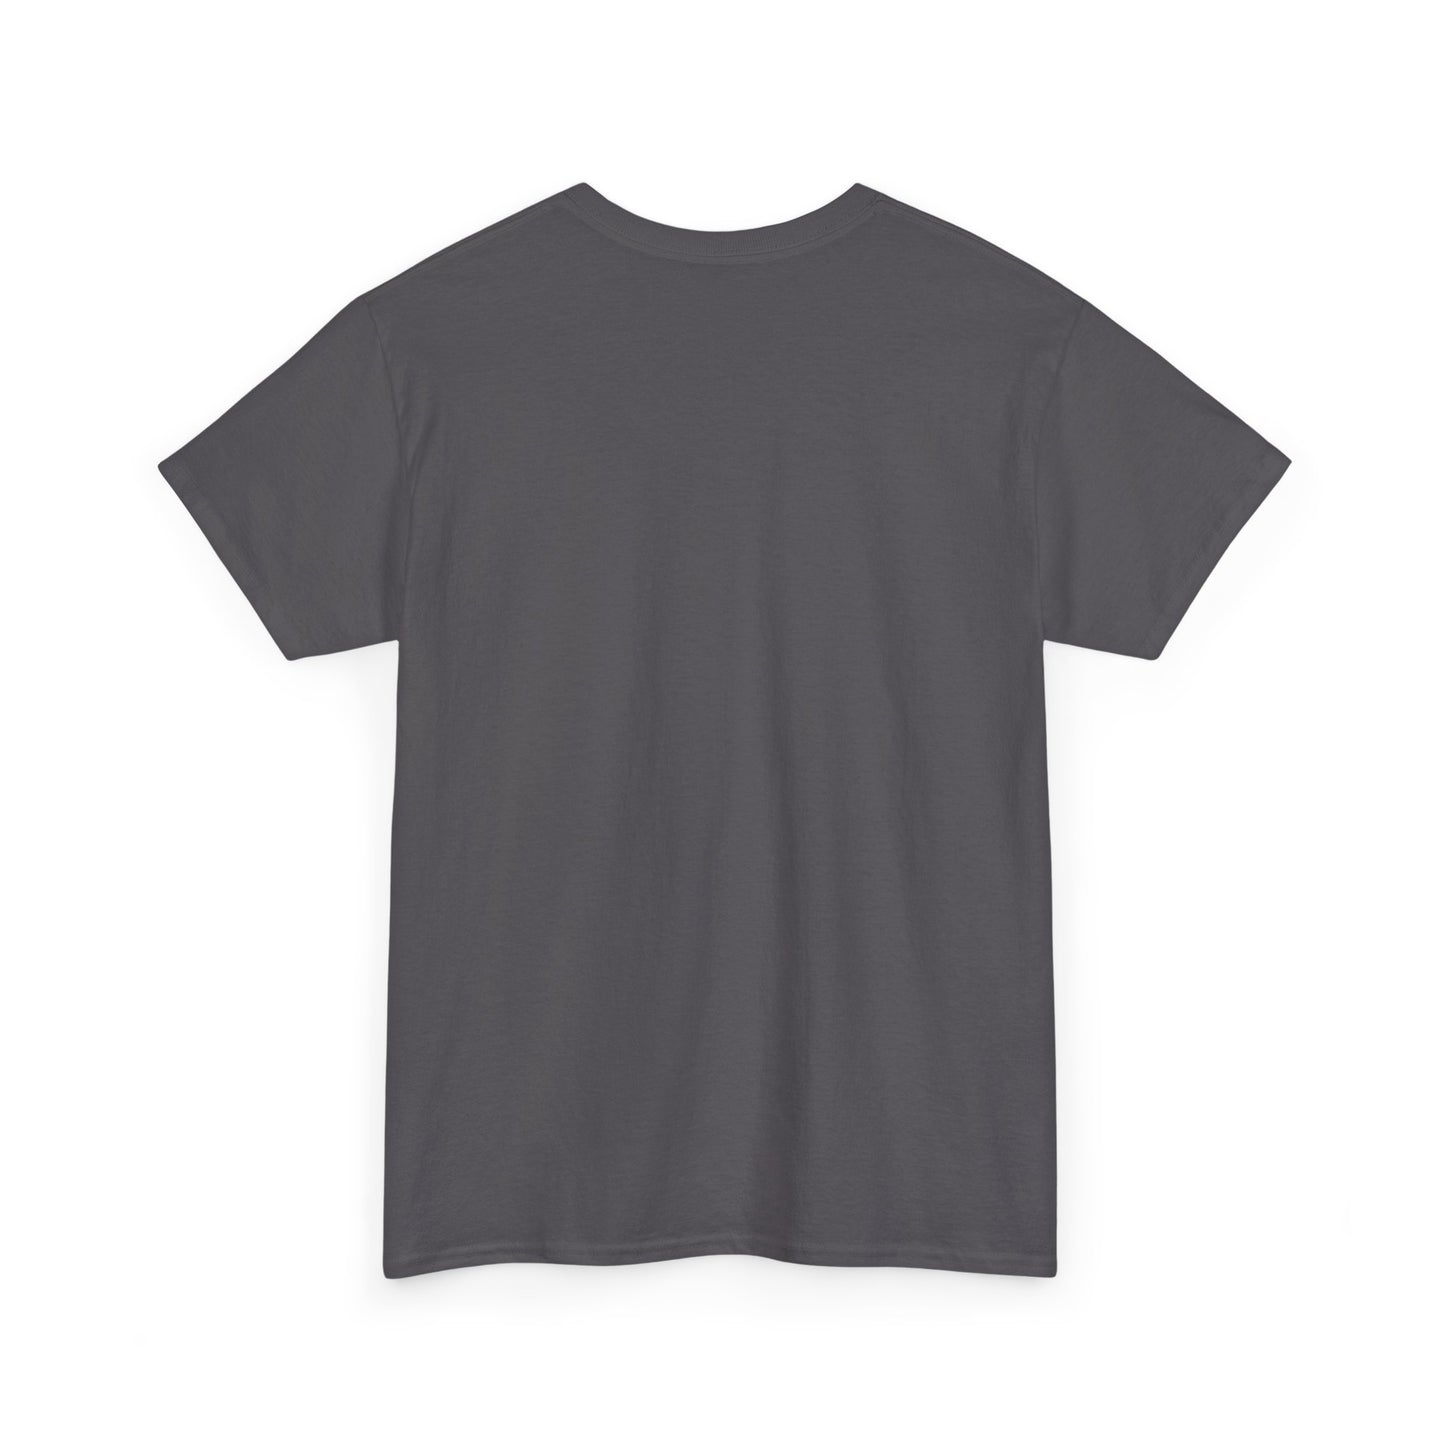 X Supercross T-Shirt, X Supercross Tee 100% Cotton, 4 Colours, AUS - USA warehouse, free post.